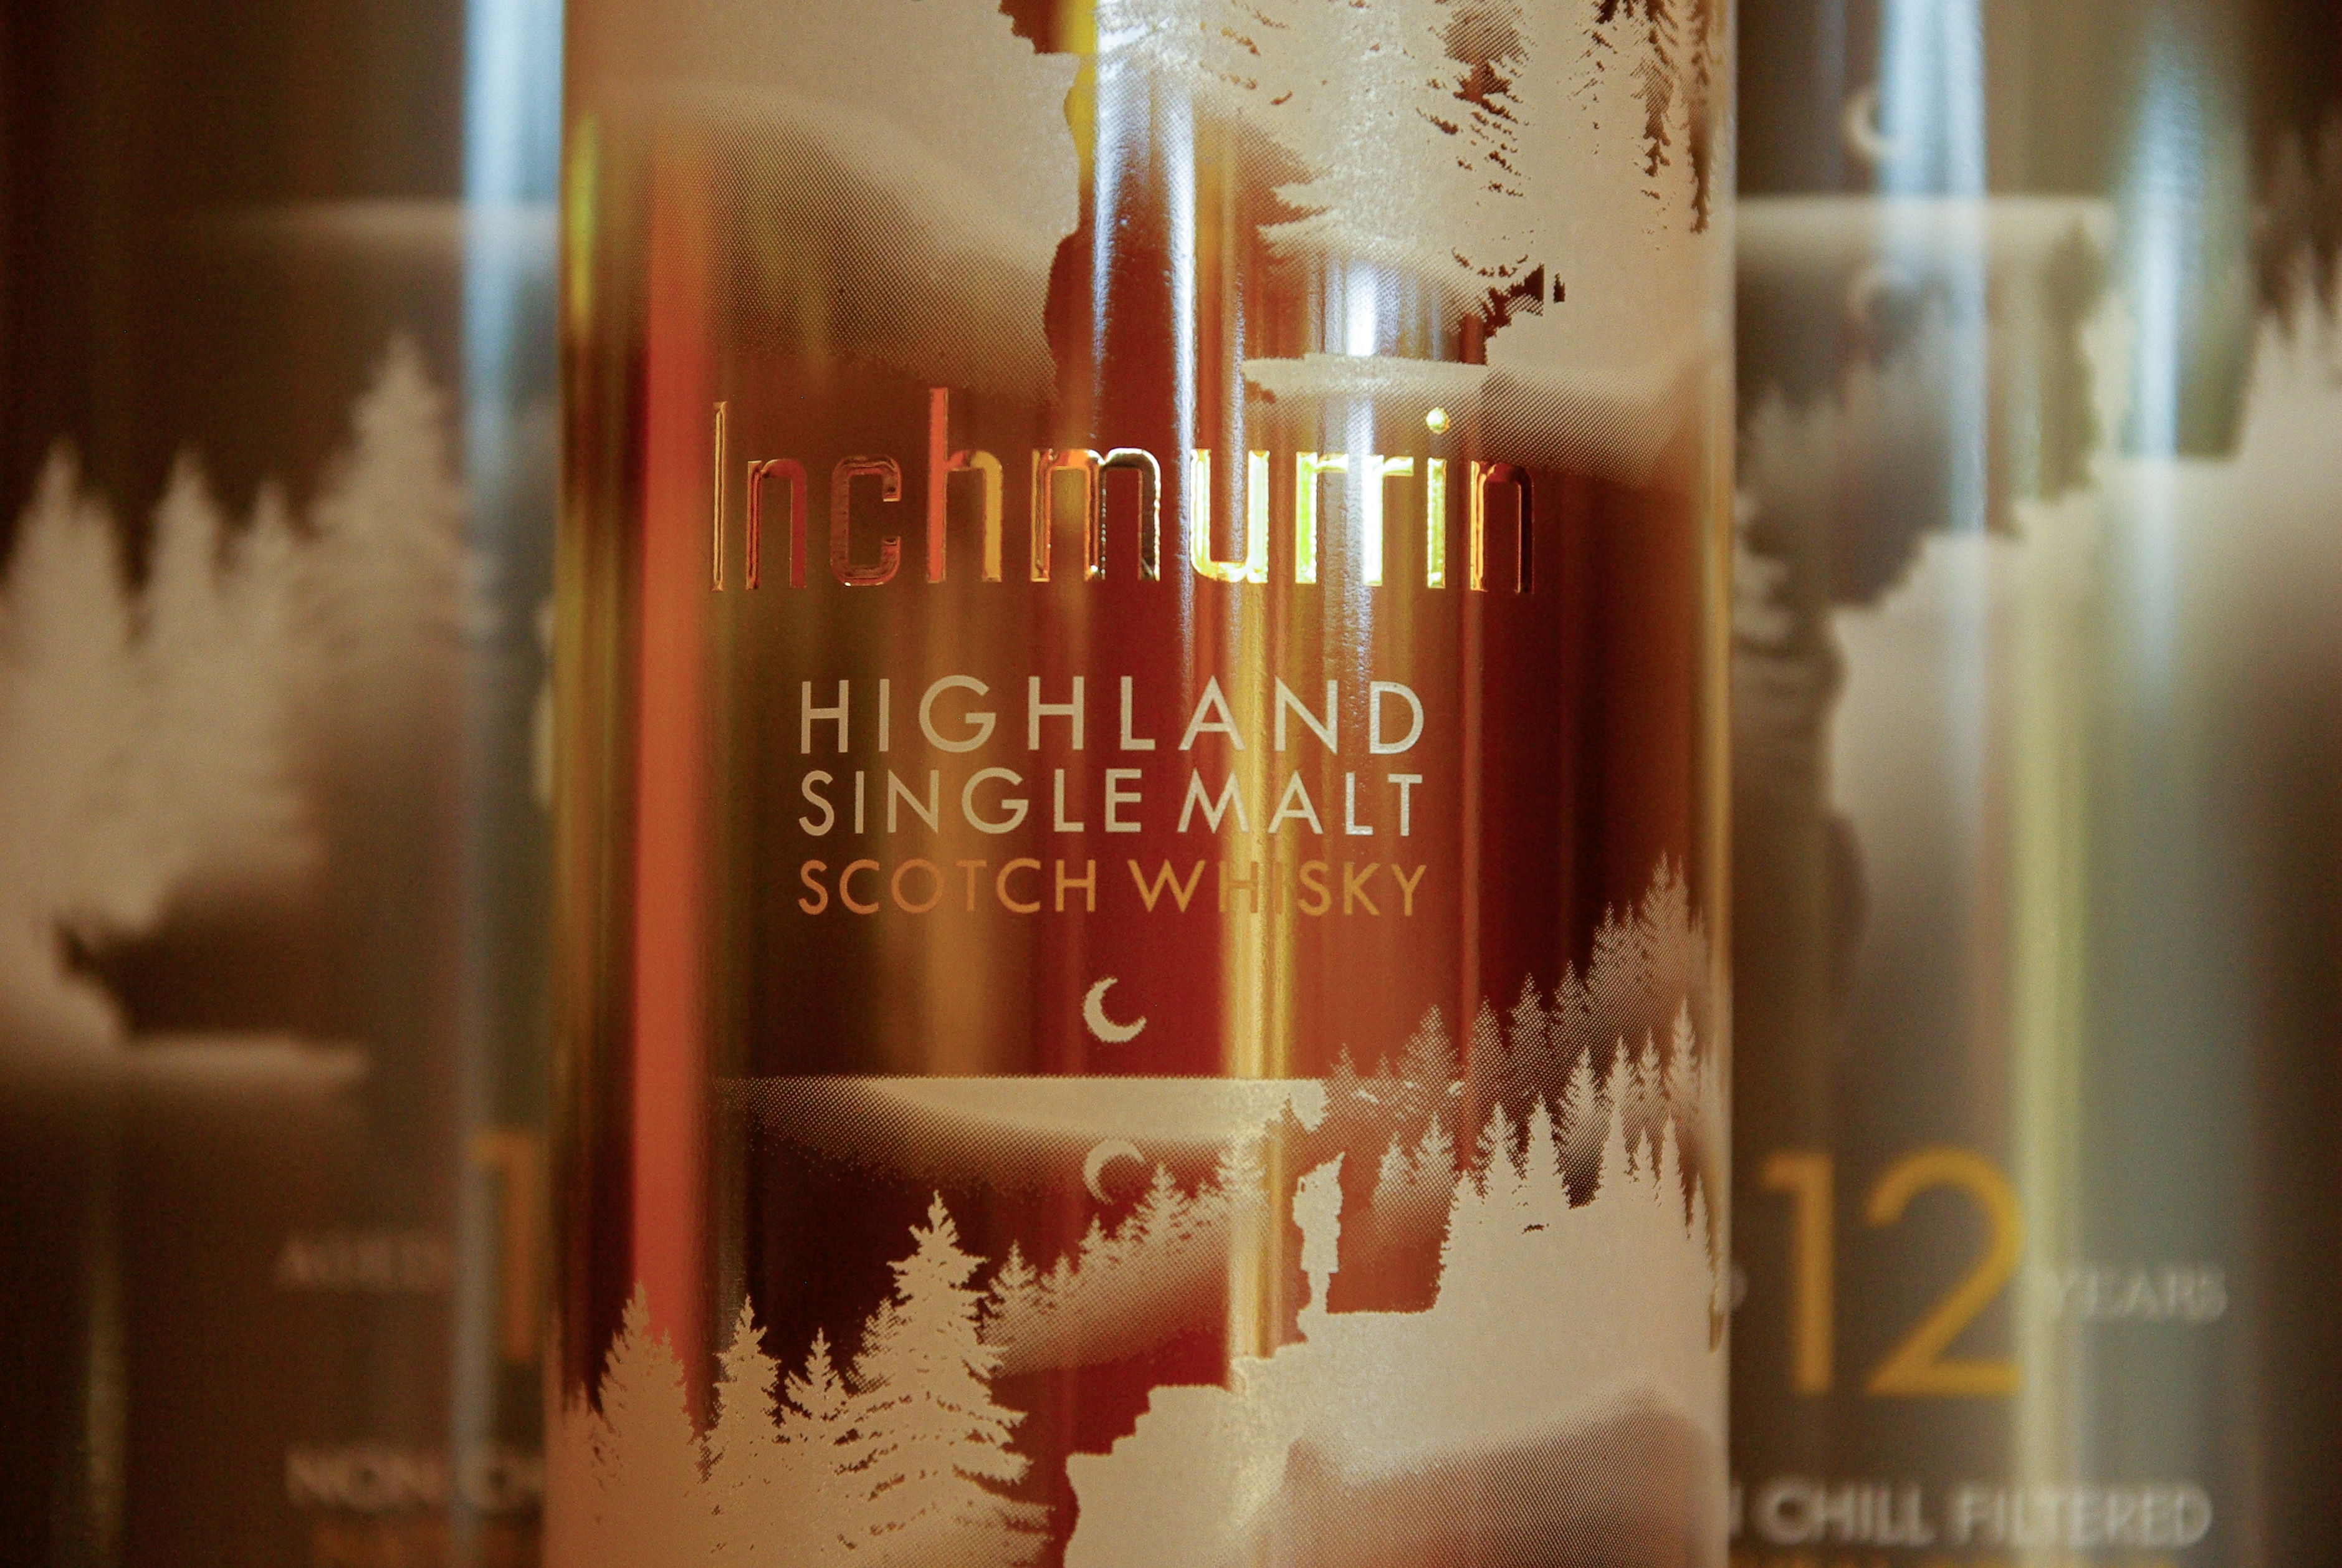 inchmurrin highland single malt scotch whisky